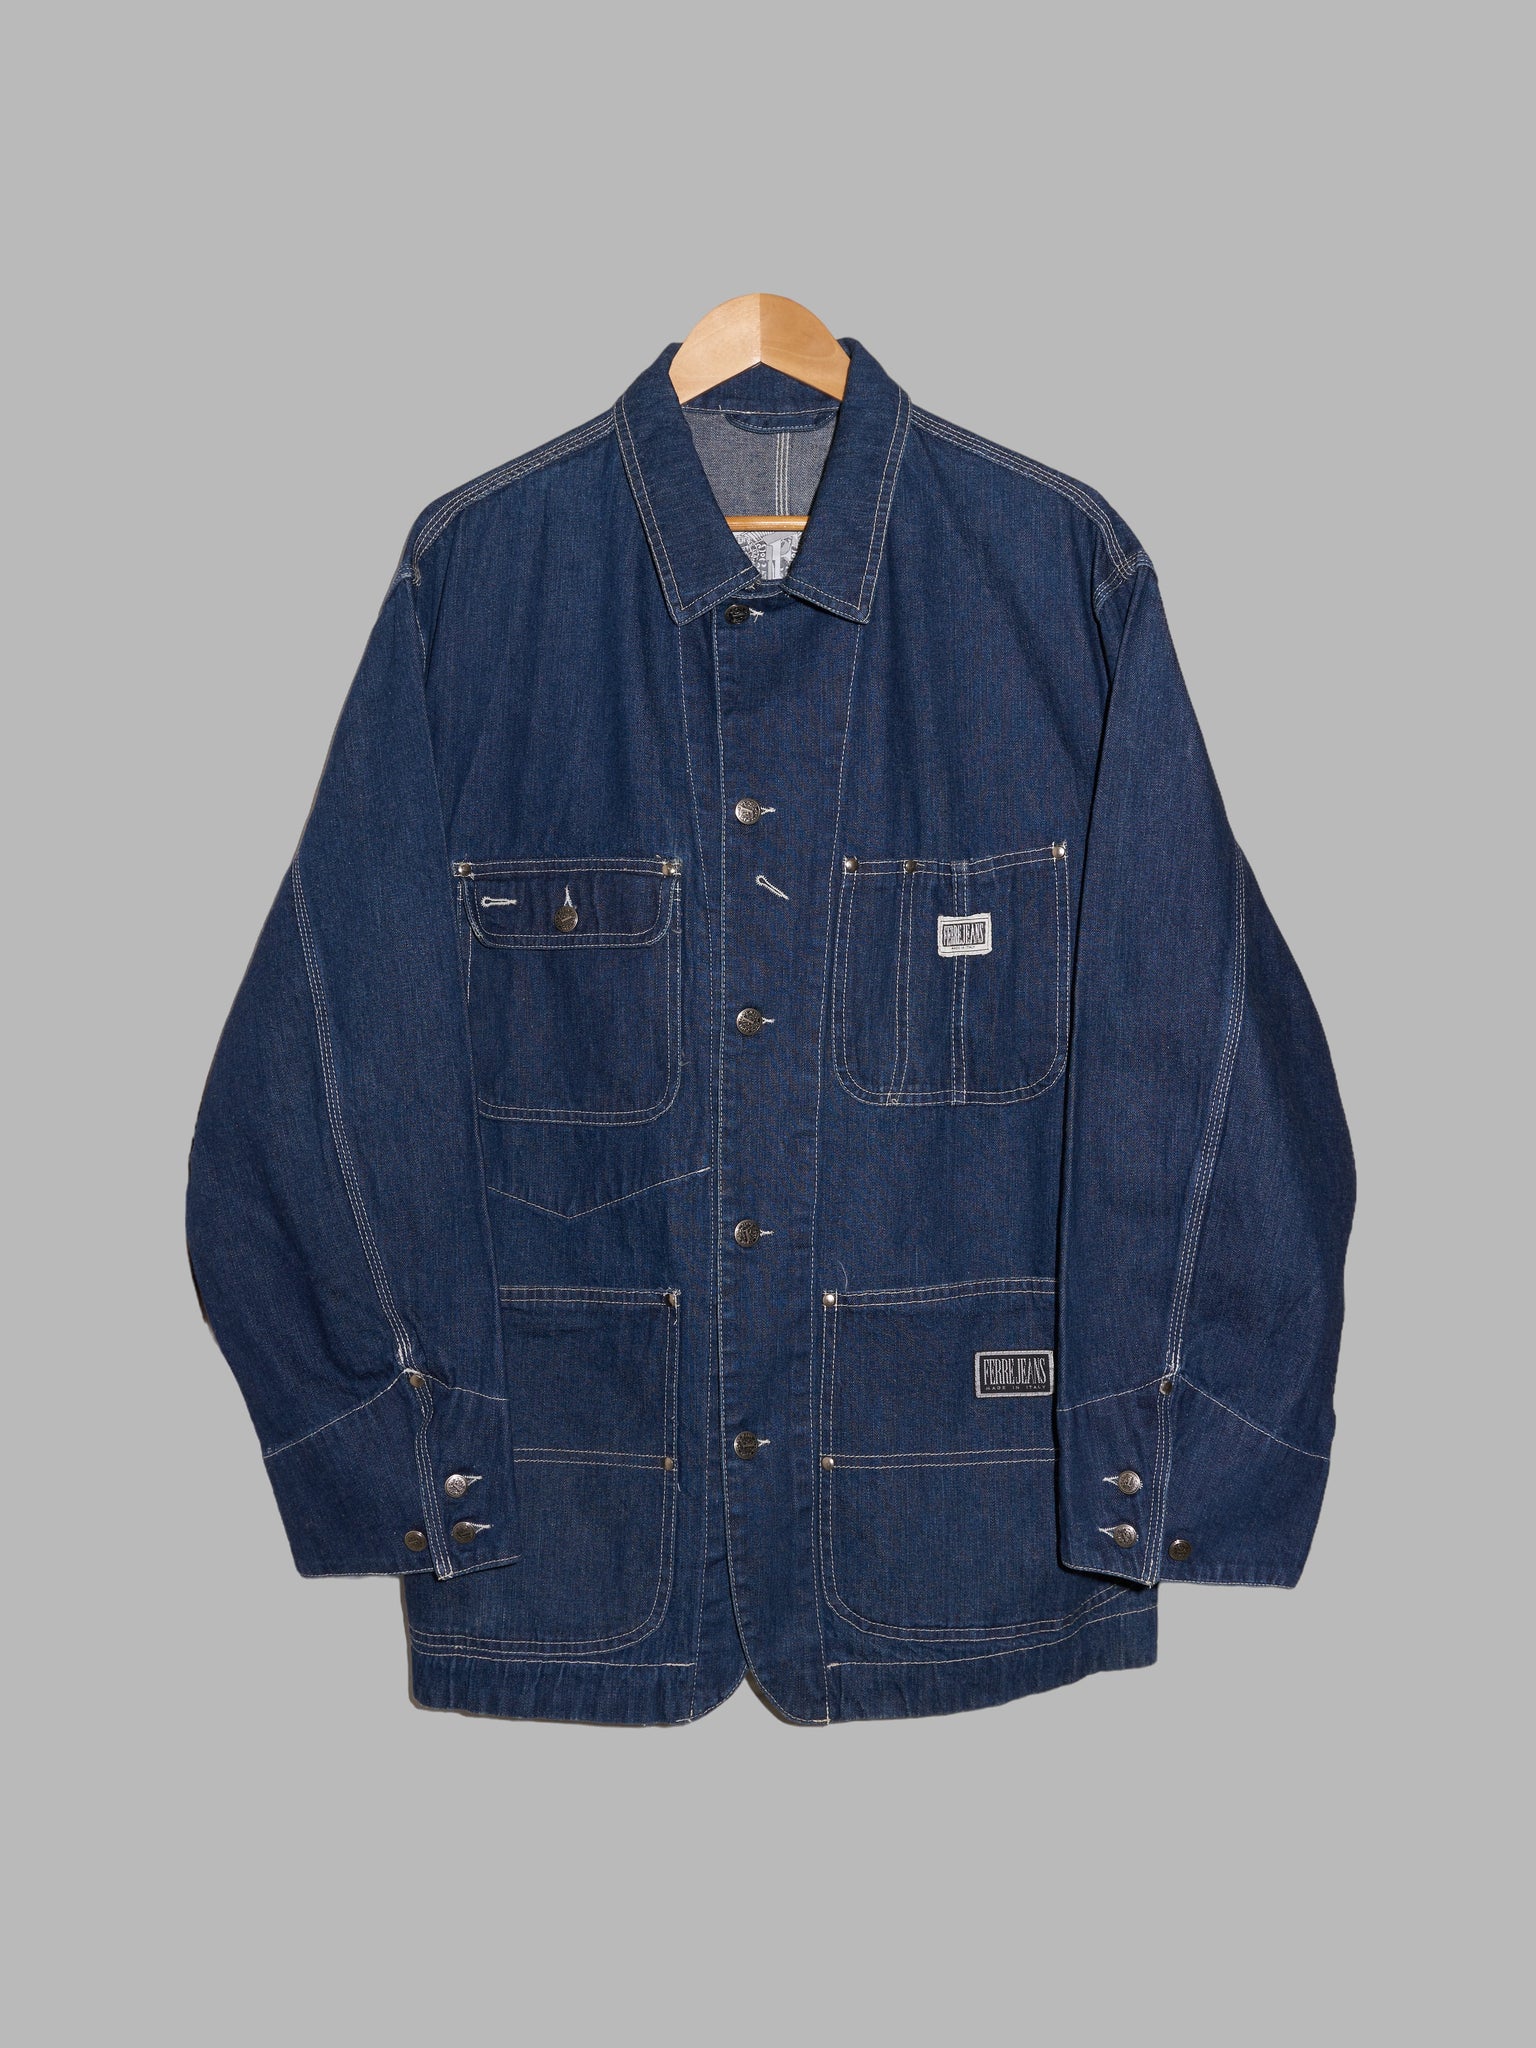 Gianfranco Ferre Jeans 1990s indigo cotton four pocket denim jacket